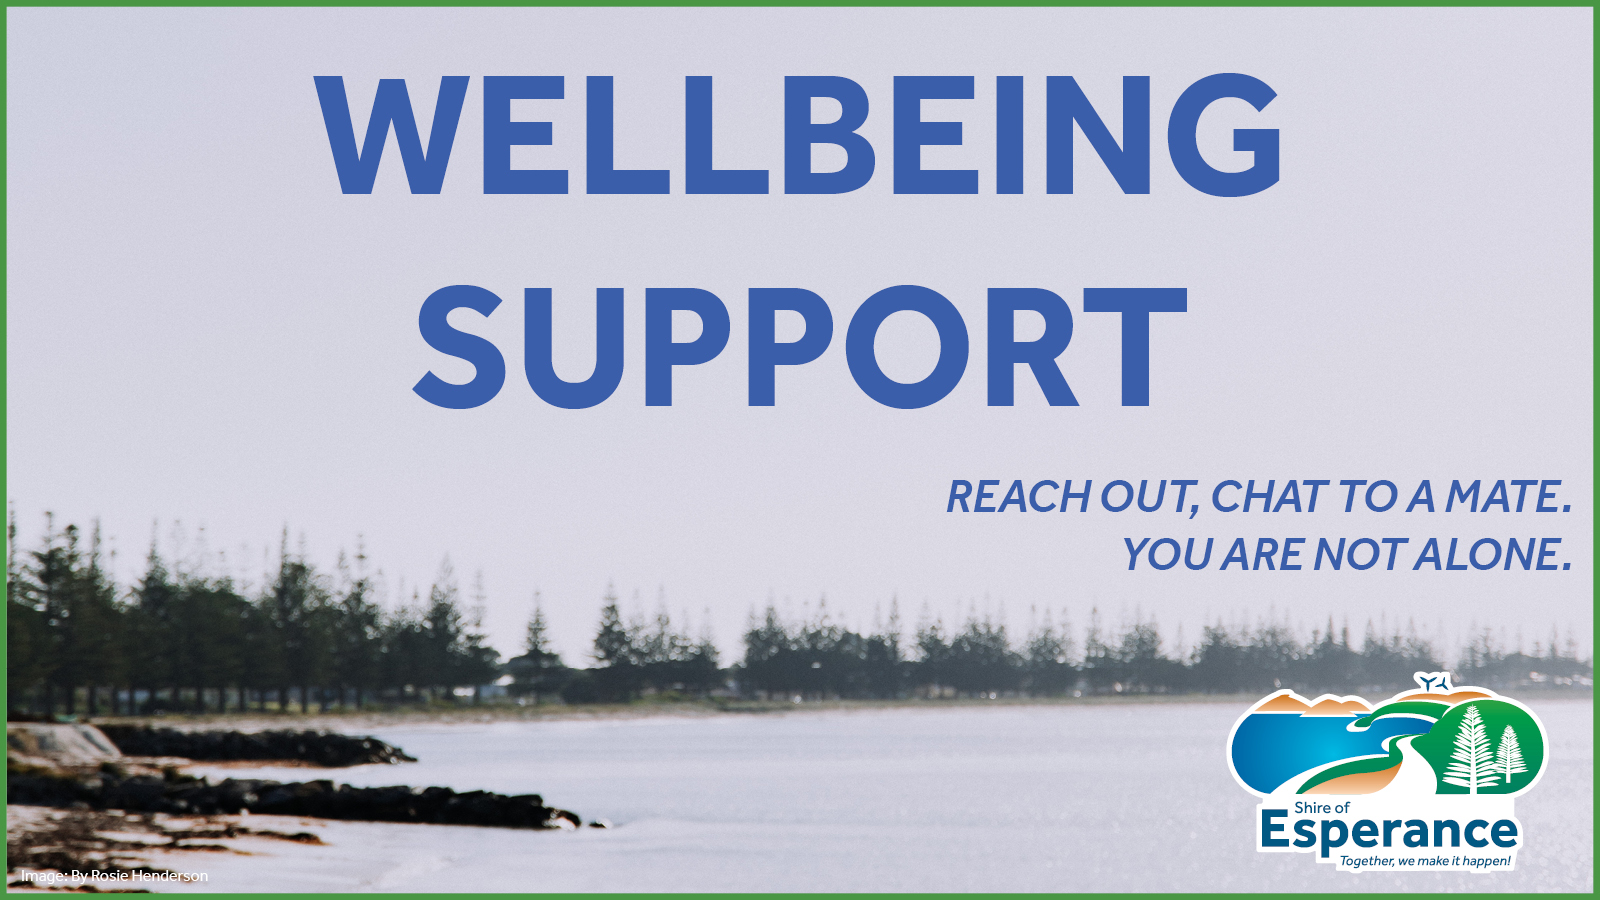 Wellbeing Support Details